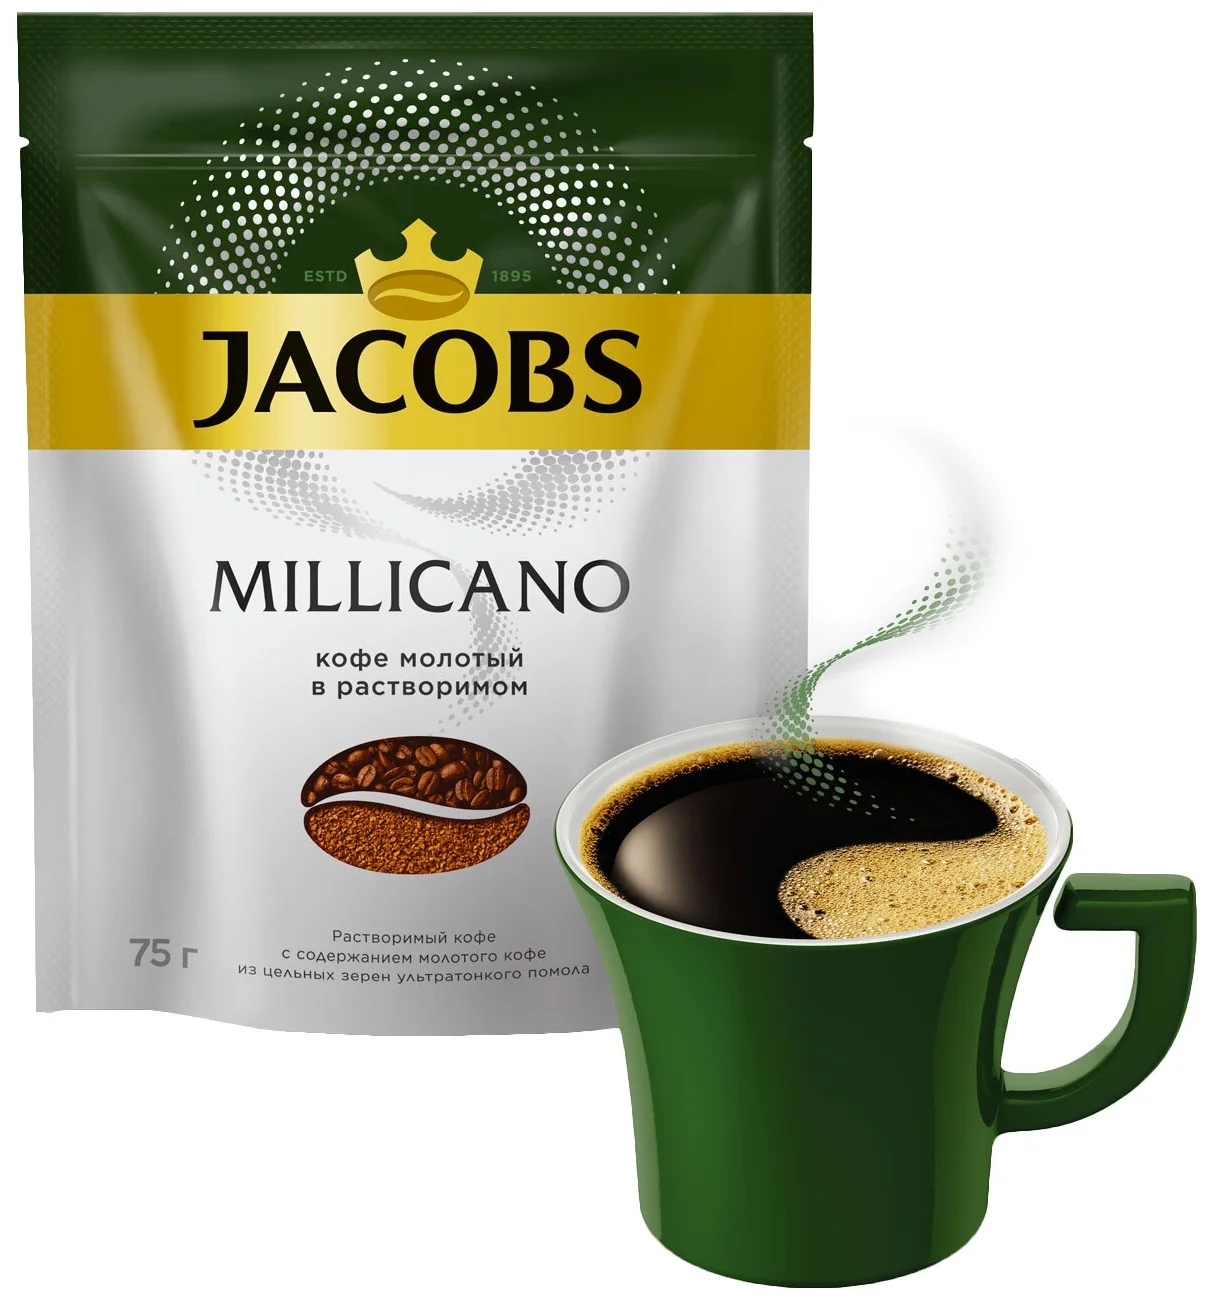 Jacobs "Millicano" - степень обжарки: средняя